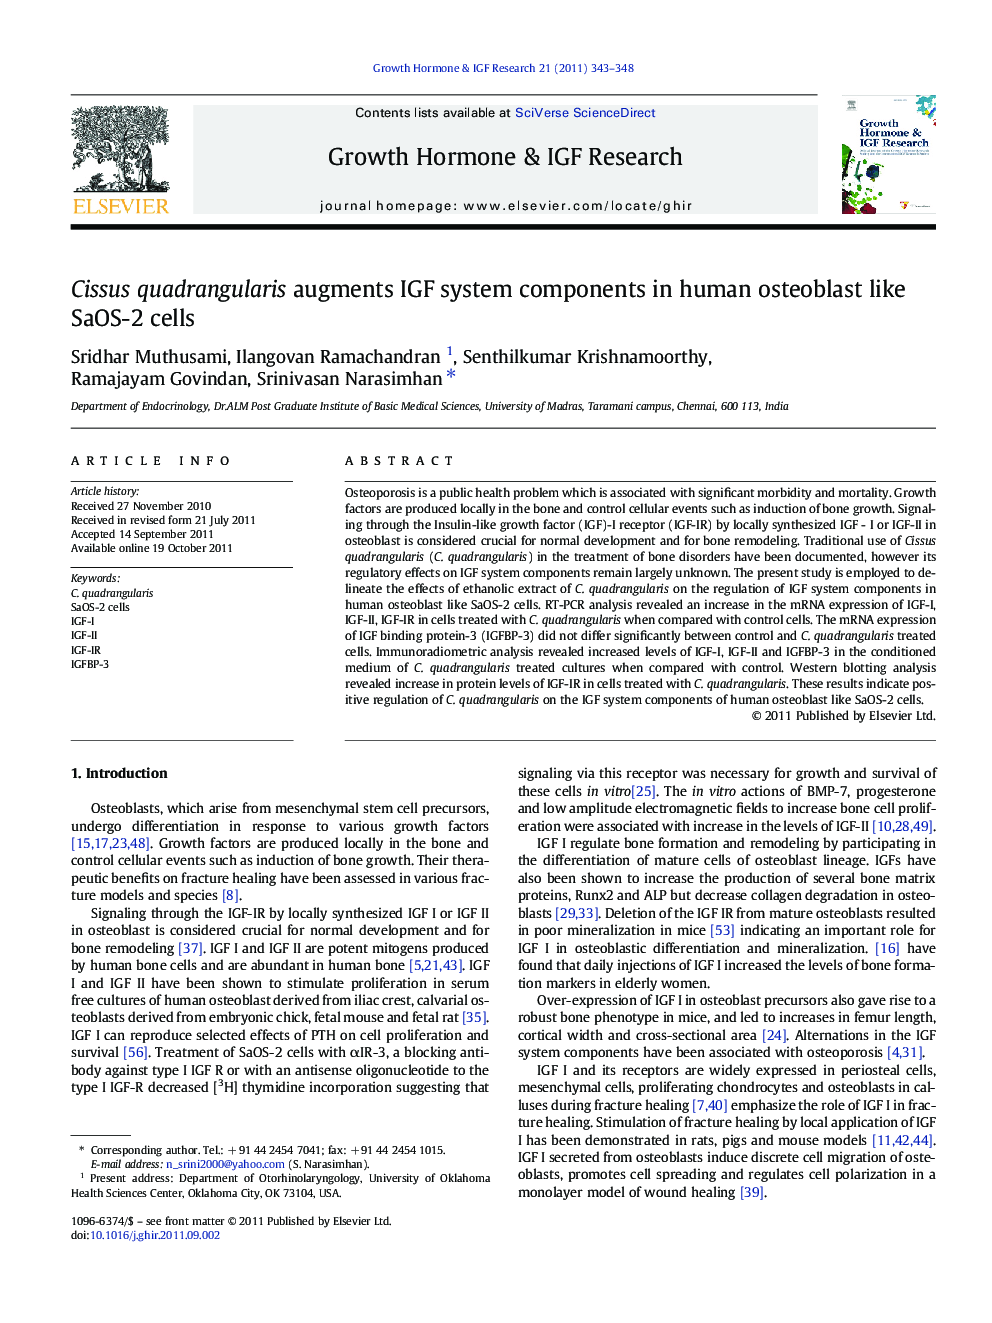 Cissus quadrangularis augments IGF system components in human osteoblast like SaOS-2 cells